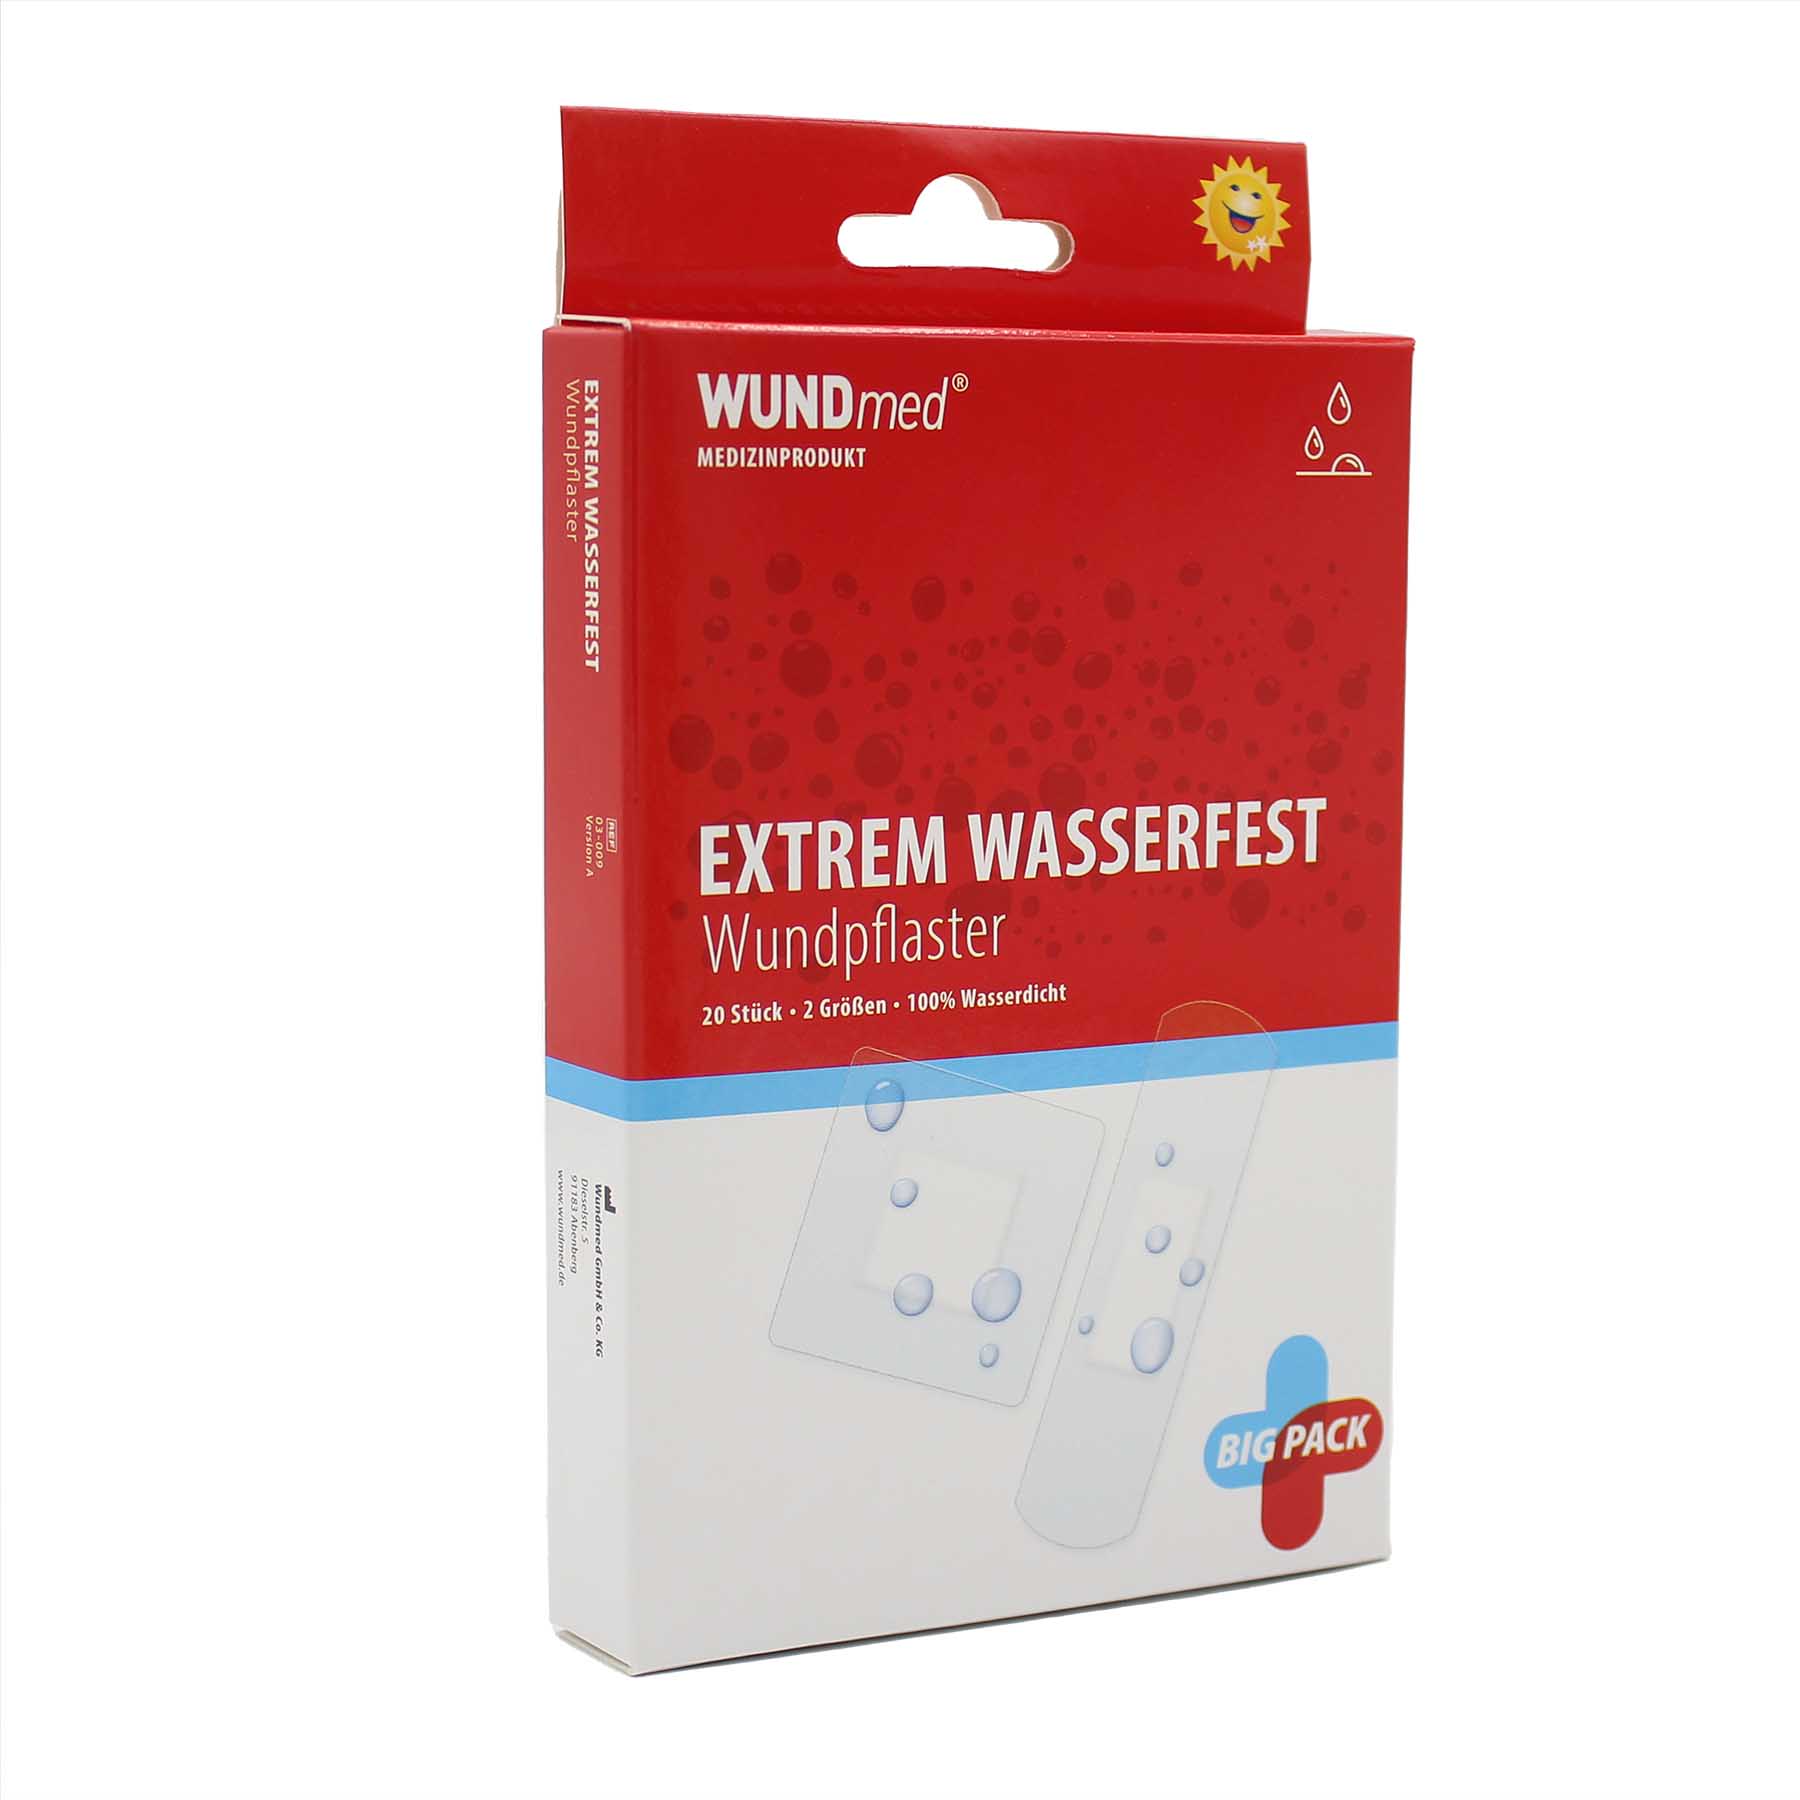 WUNDmed® Pflaster extrem wasserfest transparent 20 Stück/Packung